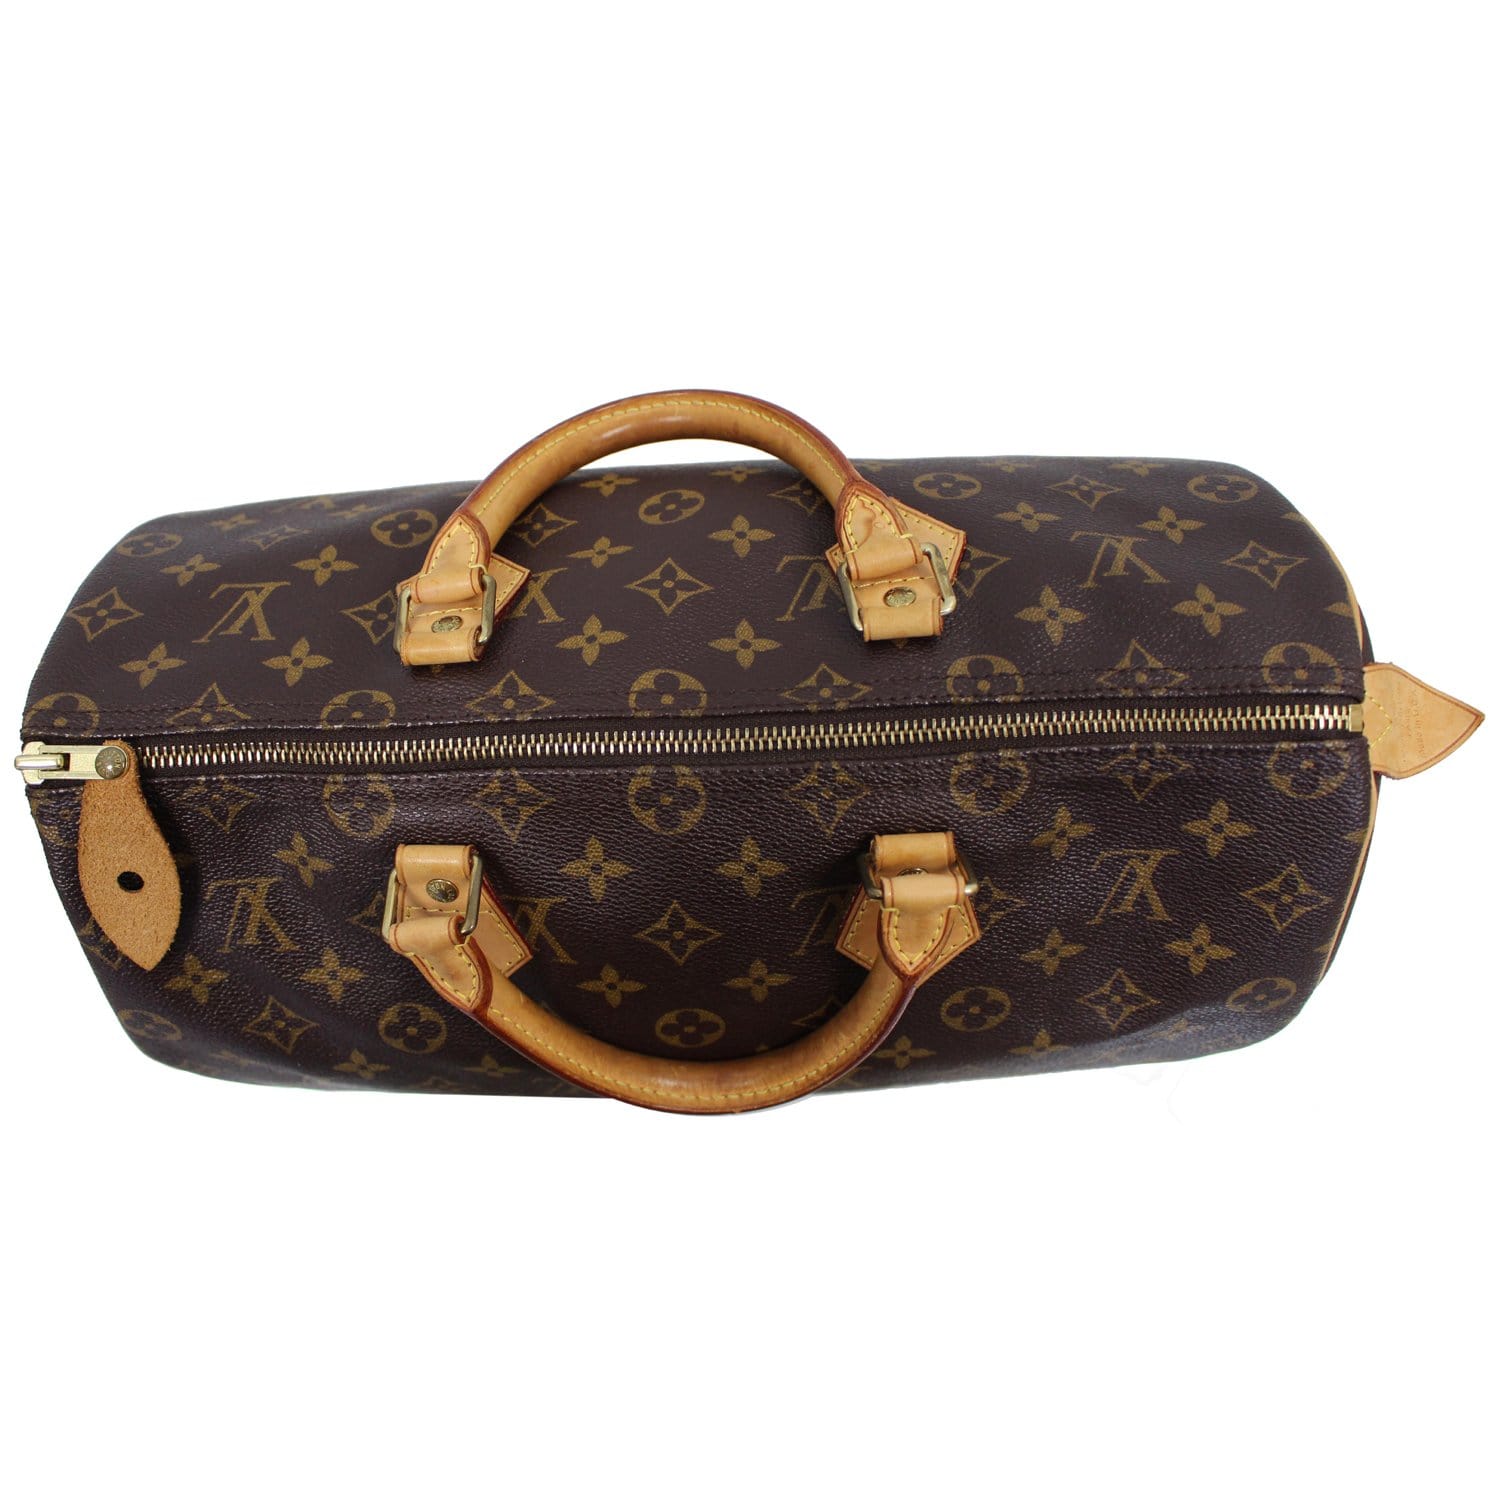 Louis Vuitton Speedy 35 Monogram Top Handle Bag on SALE